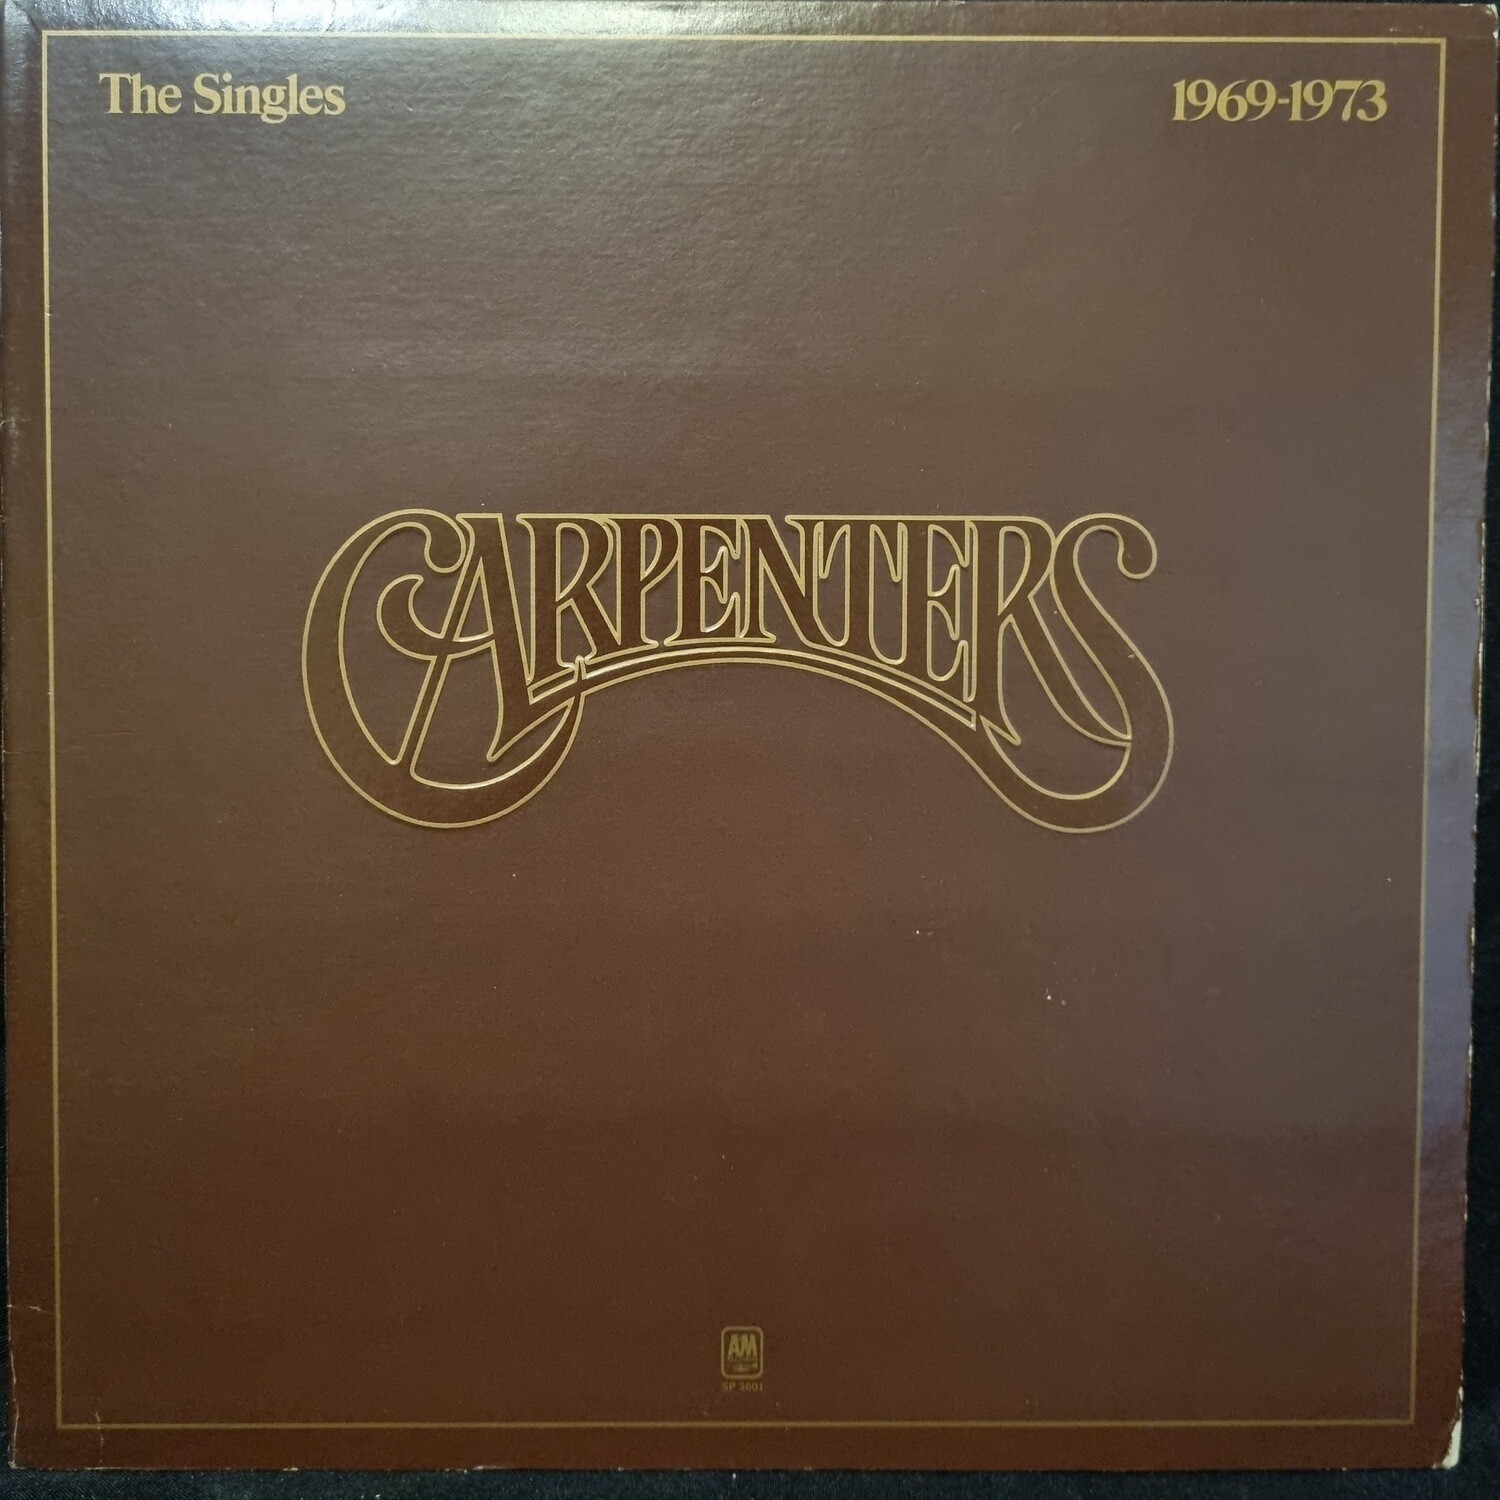 Carpenters- The Singles 1969-1973